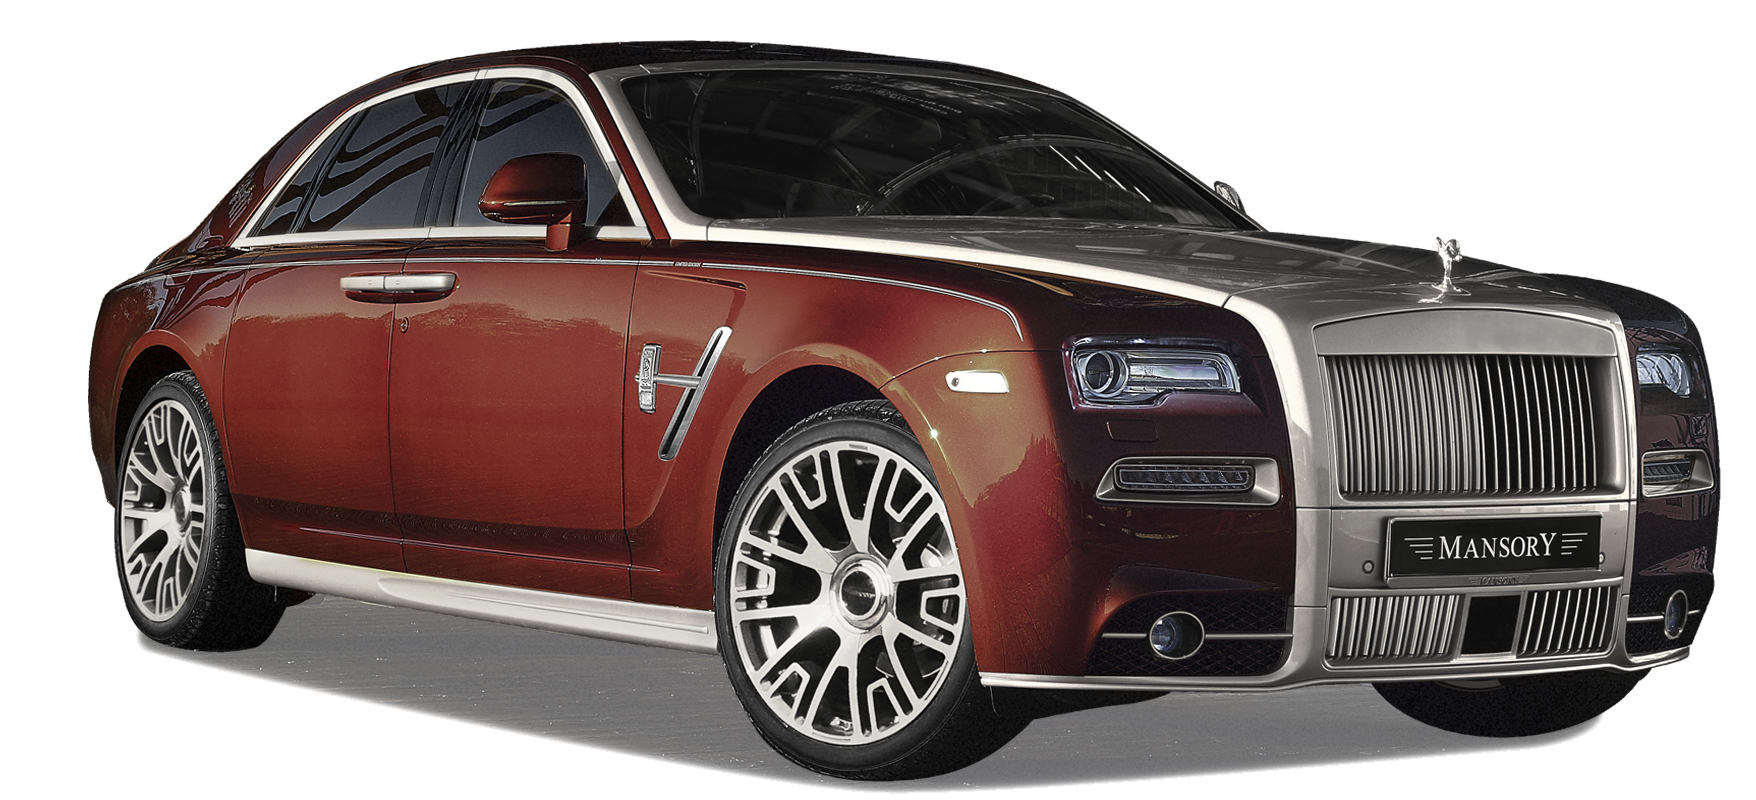 Rolls rouges Royce PNG image image